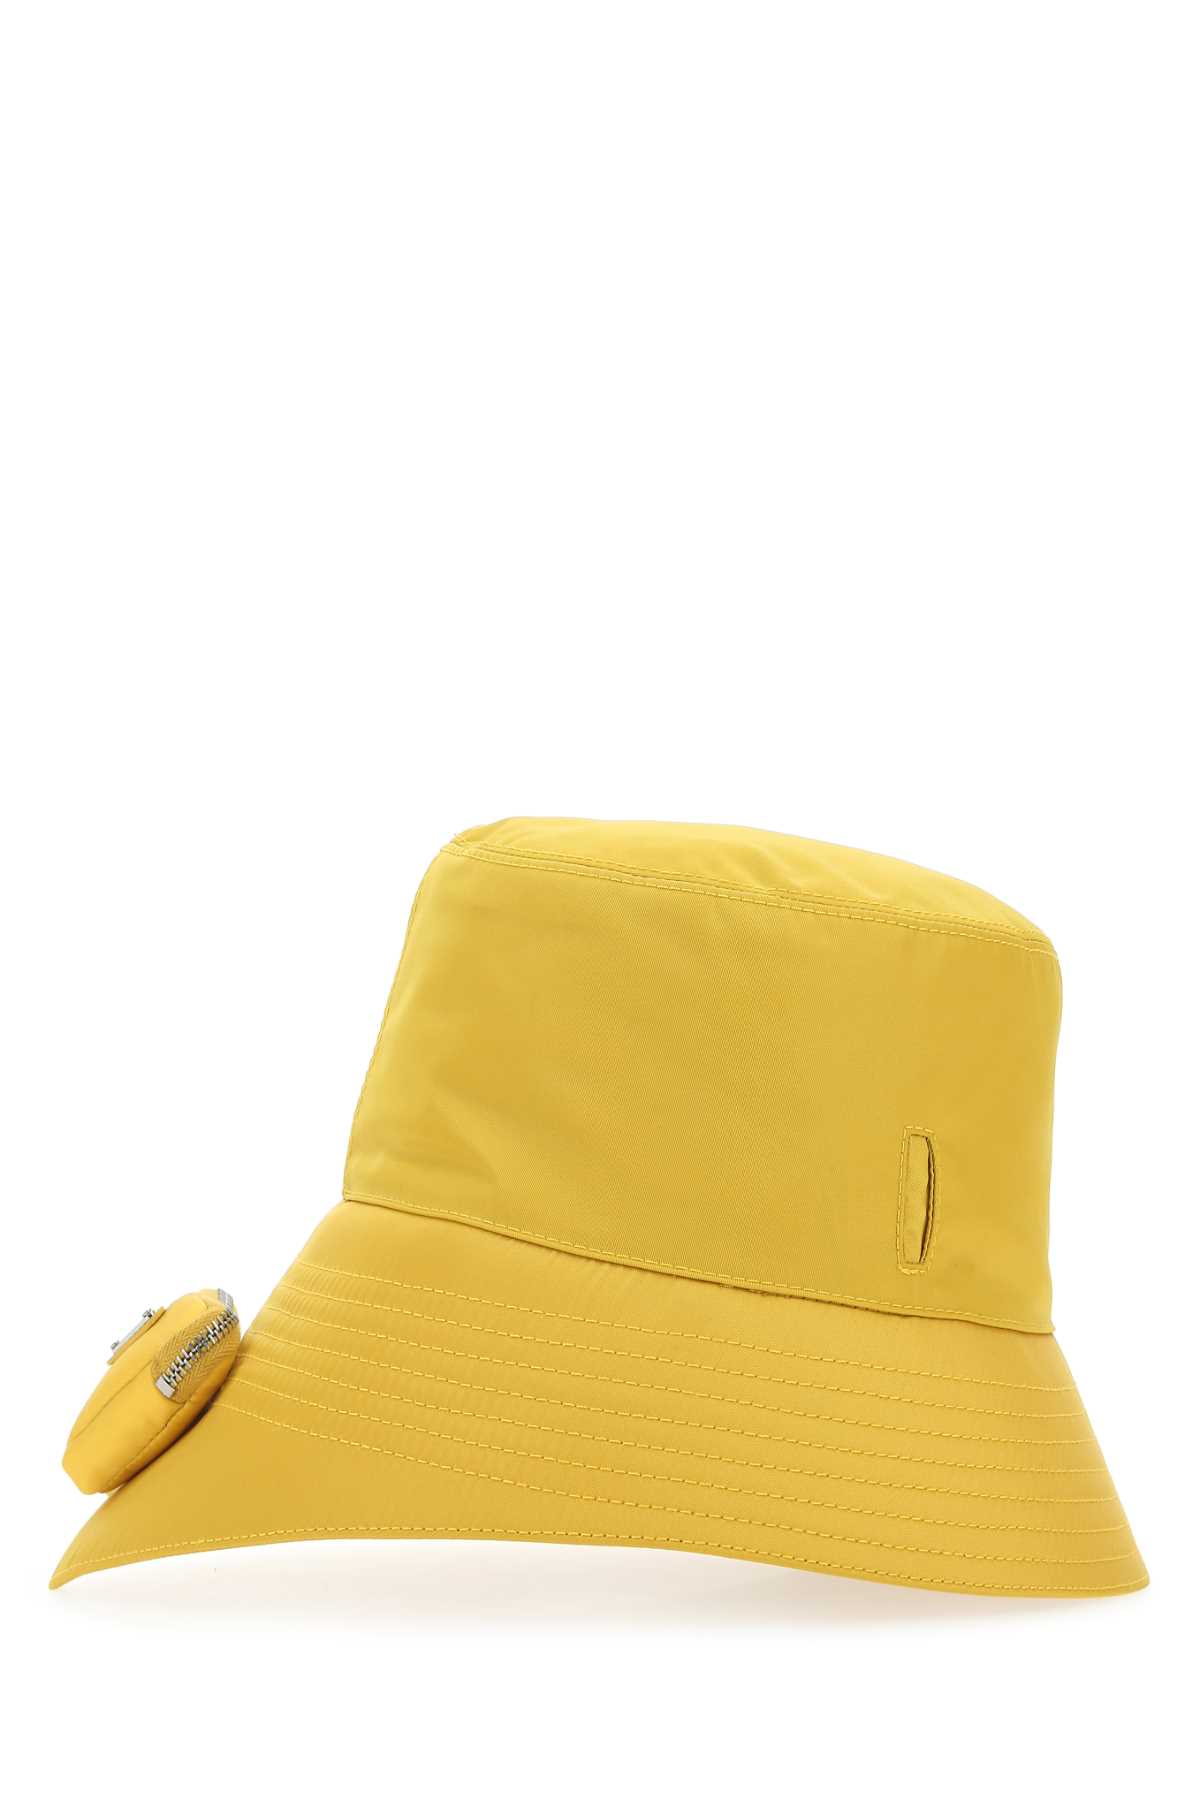 Prada Yellow Re-nylon Hat In F0010